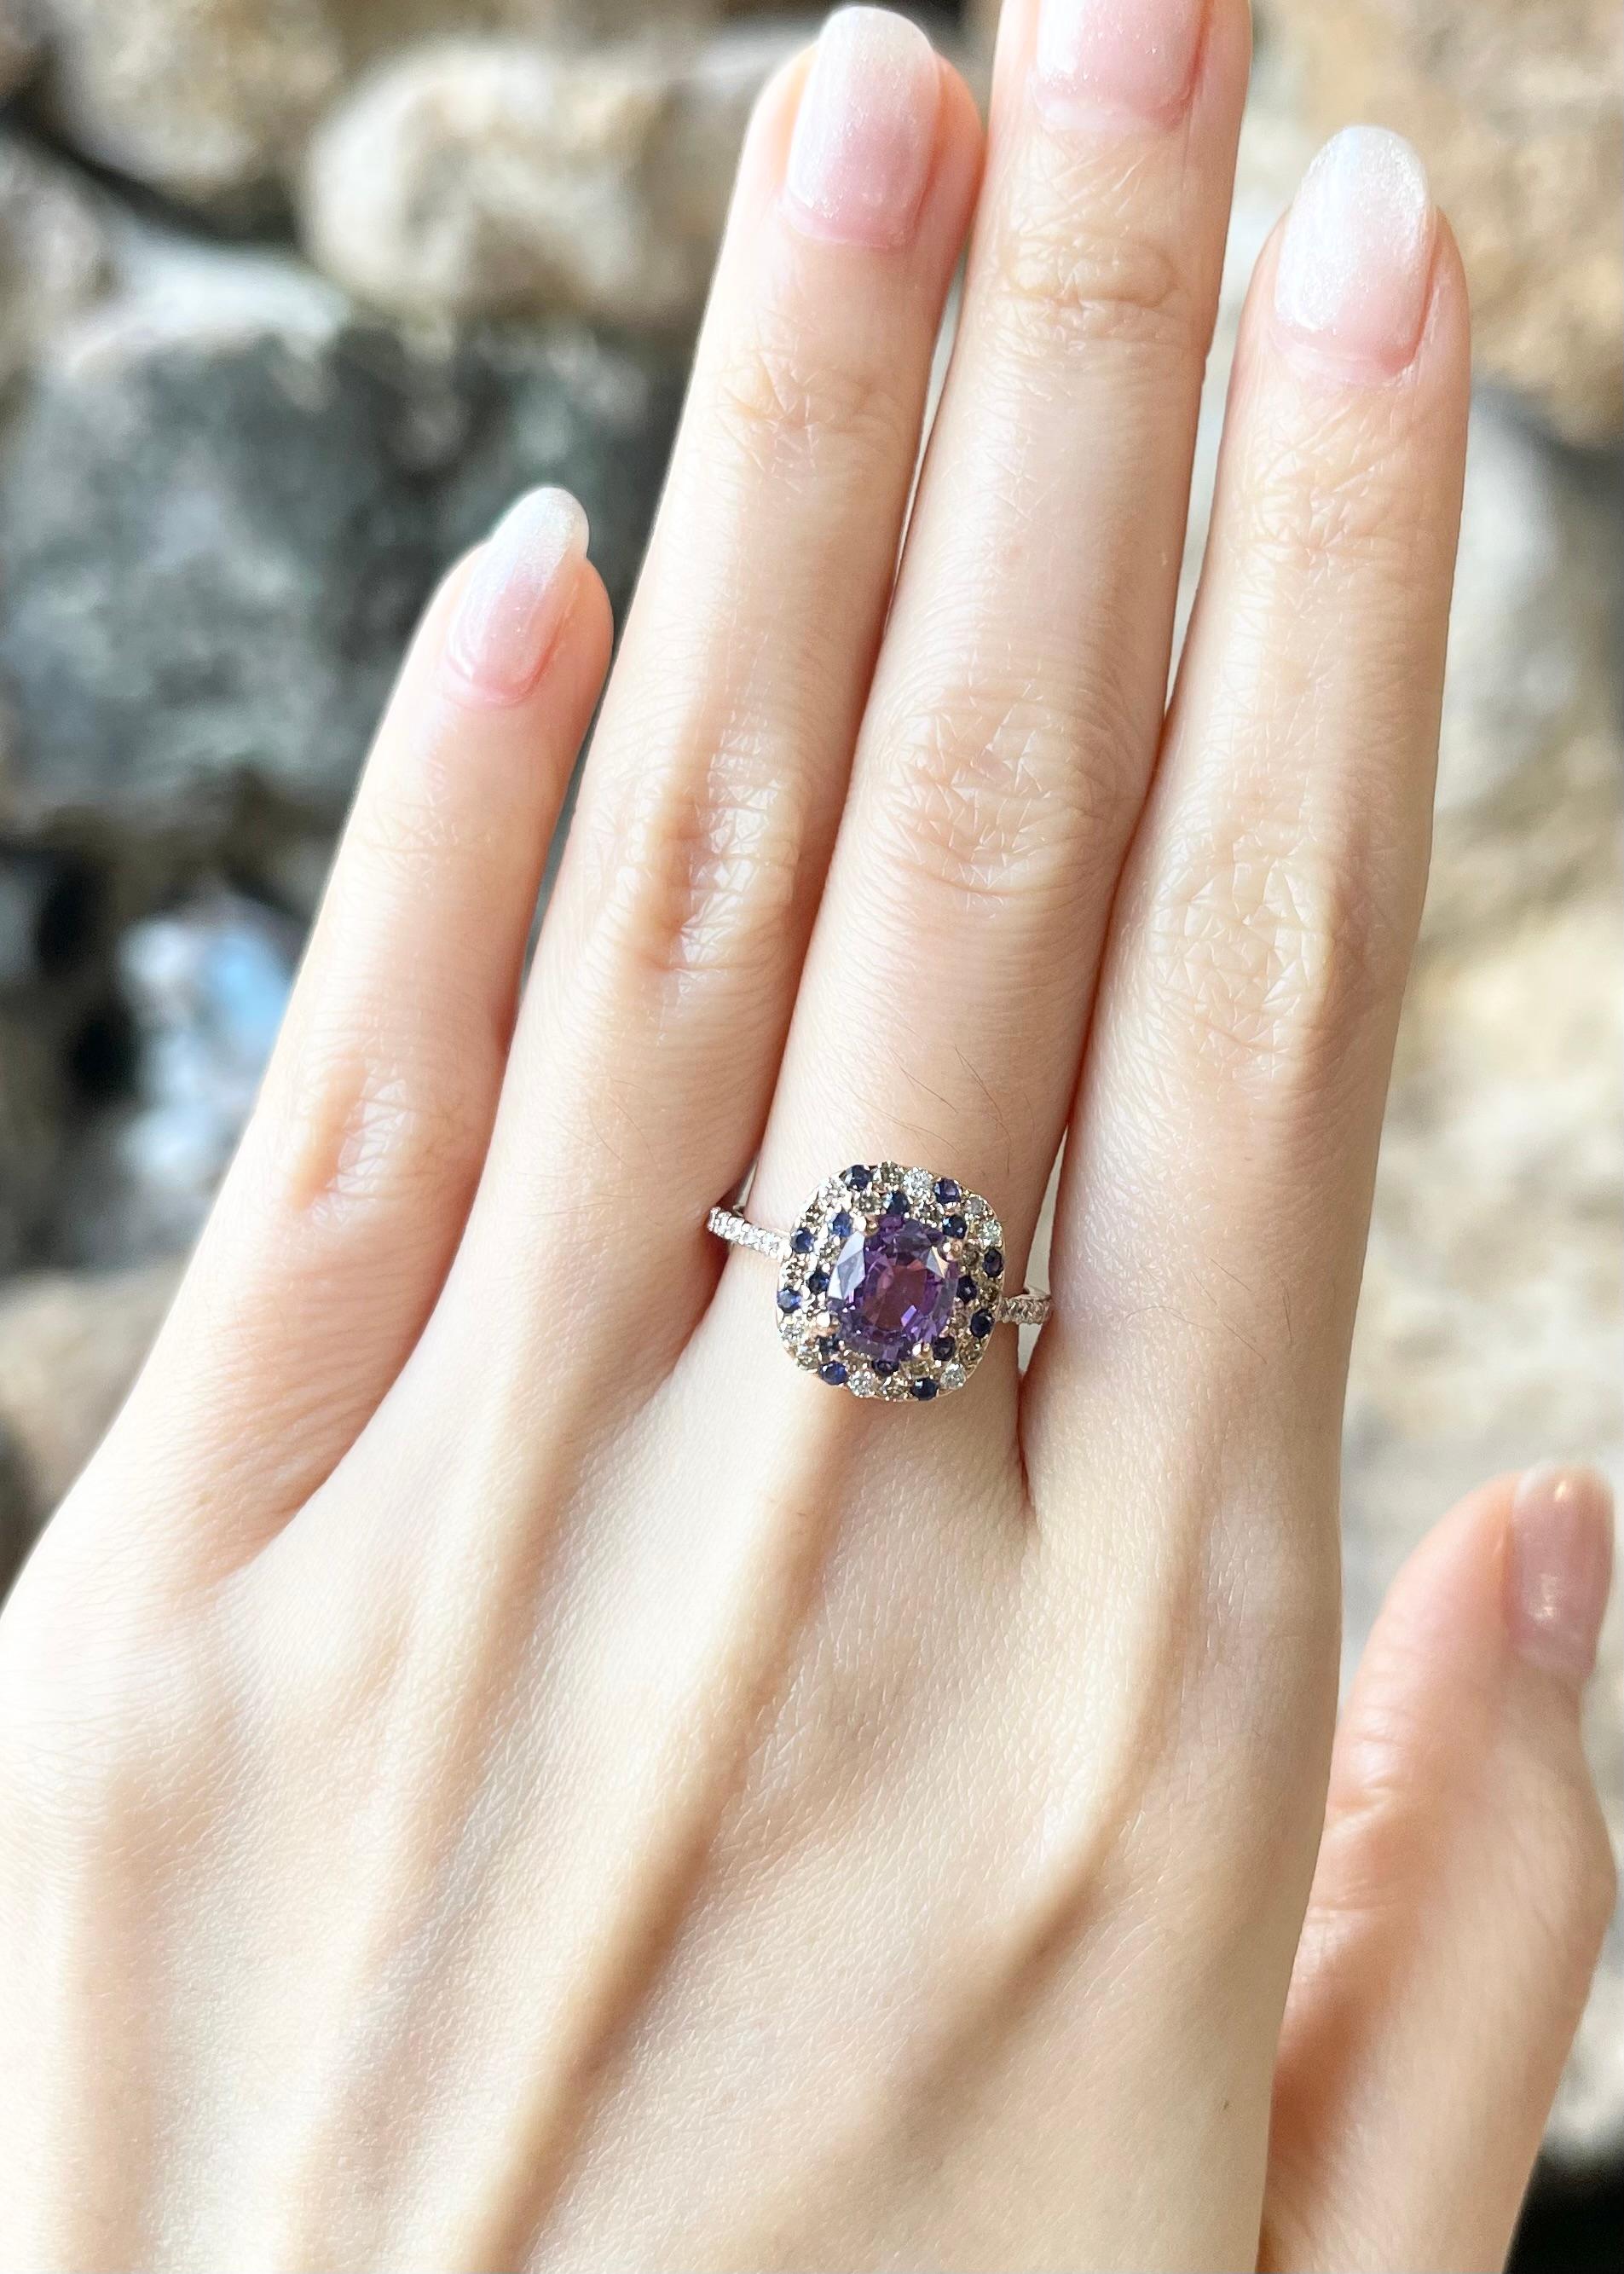 Purple Sapphire 1.90 carats, Purple Sapphire 0.25 carat, Brown Diamond 0.20 carat and Diamond 0.19 carat Ring set in 18K Rose Gold Settings

Width:  1.2 cm 
Length: 1.2 cm
Ring Size: 53
Total Weight: 4.16 grams

